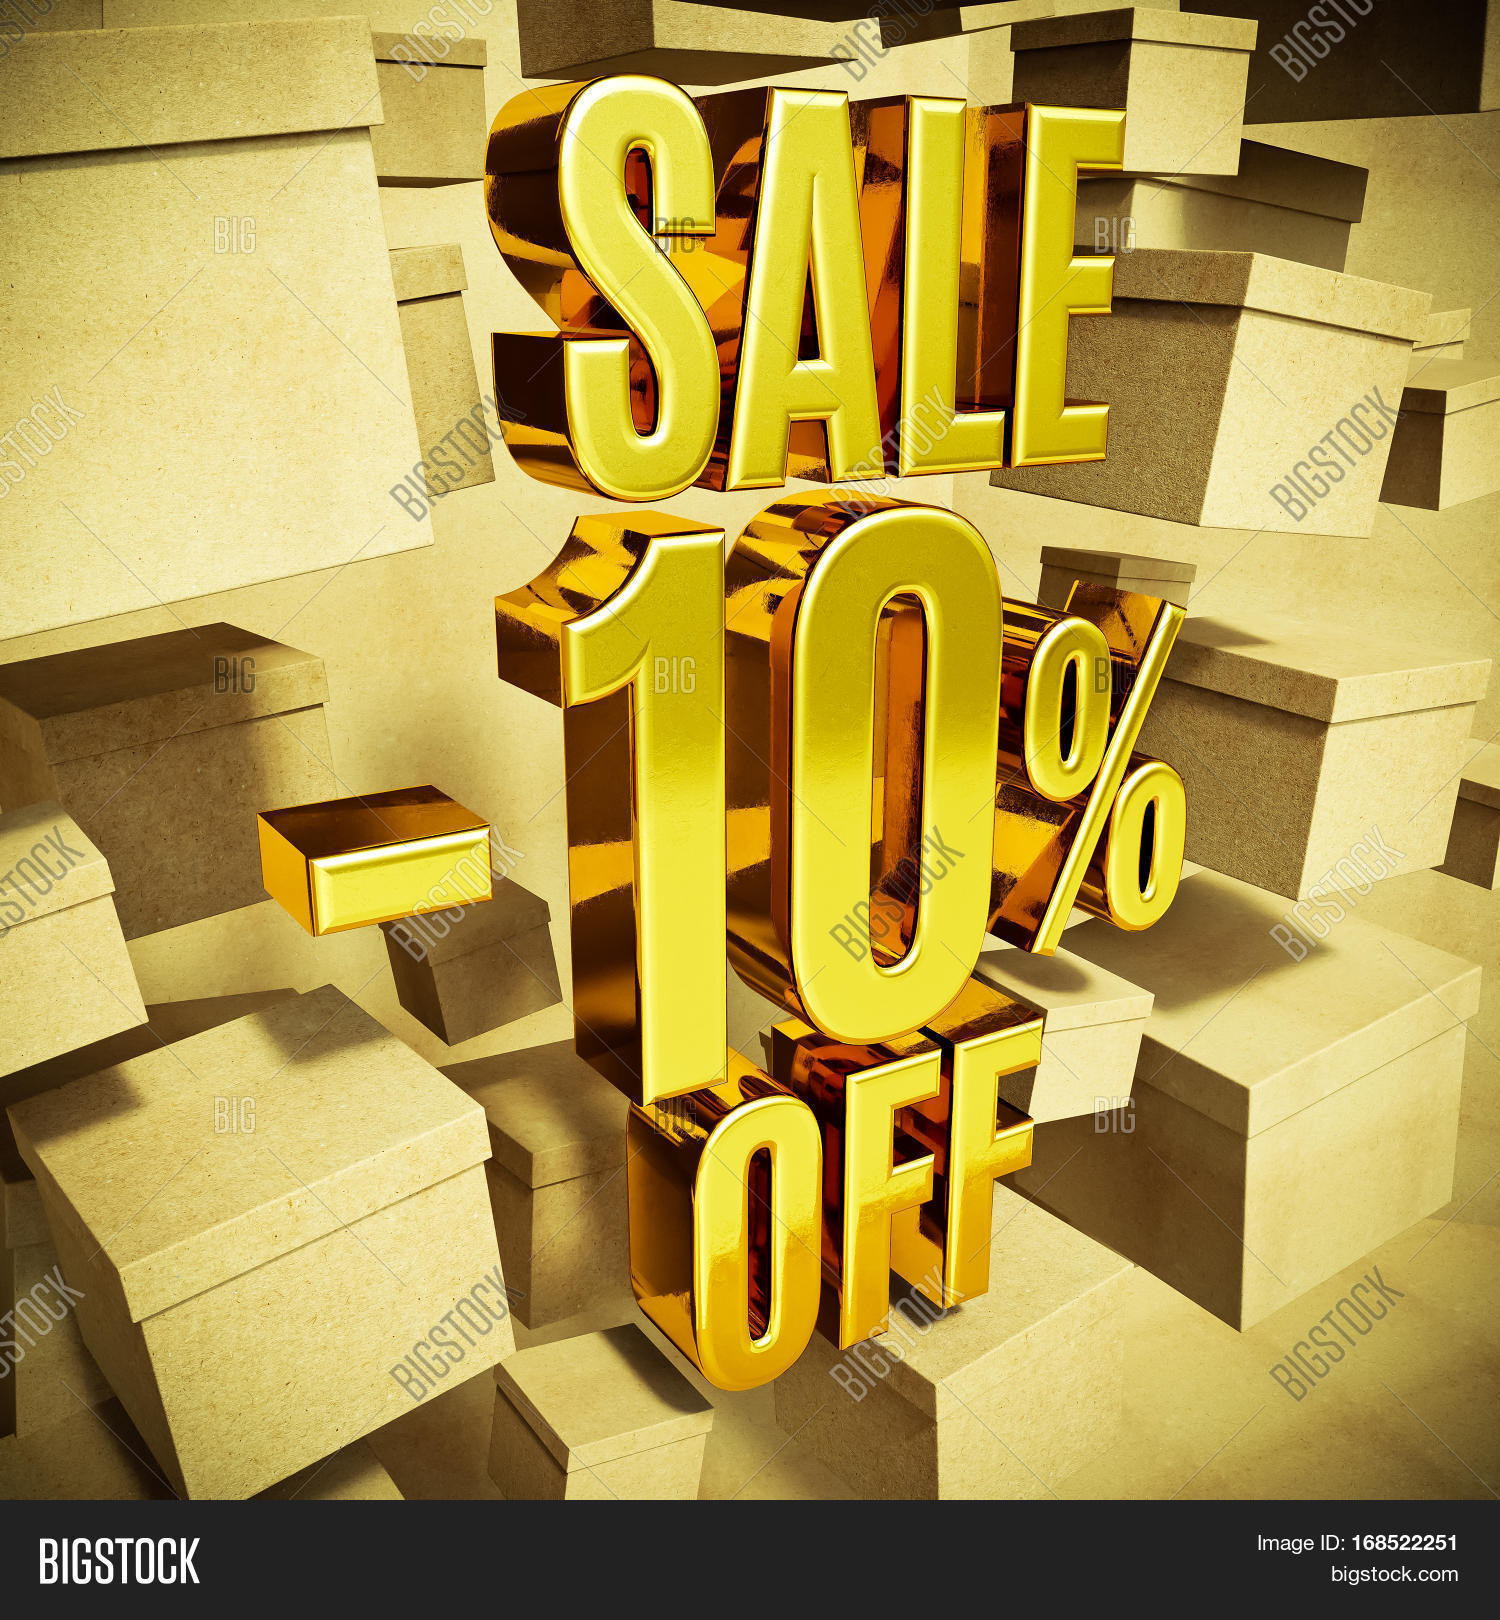 Gold 10 Percent Off Discount 3d Image & Photo | Bigstock